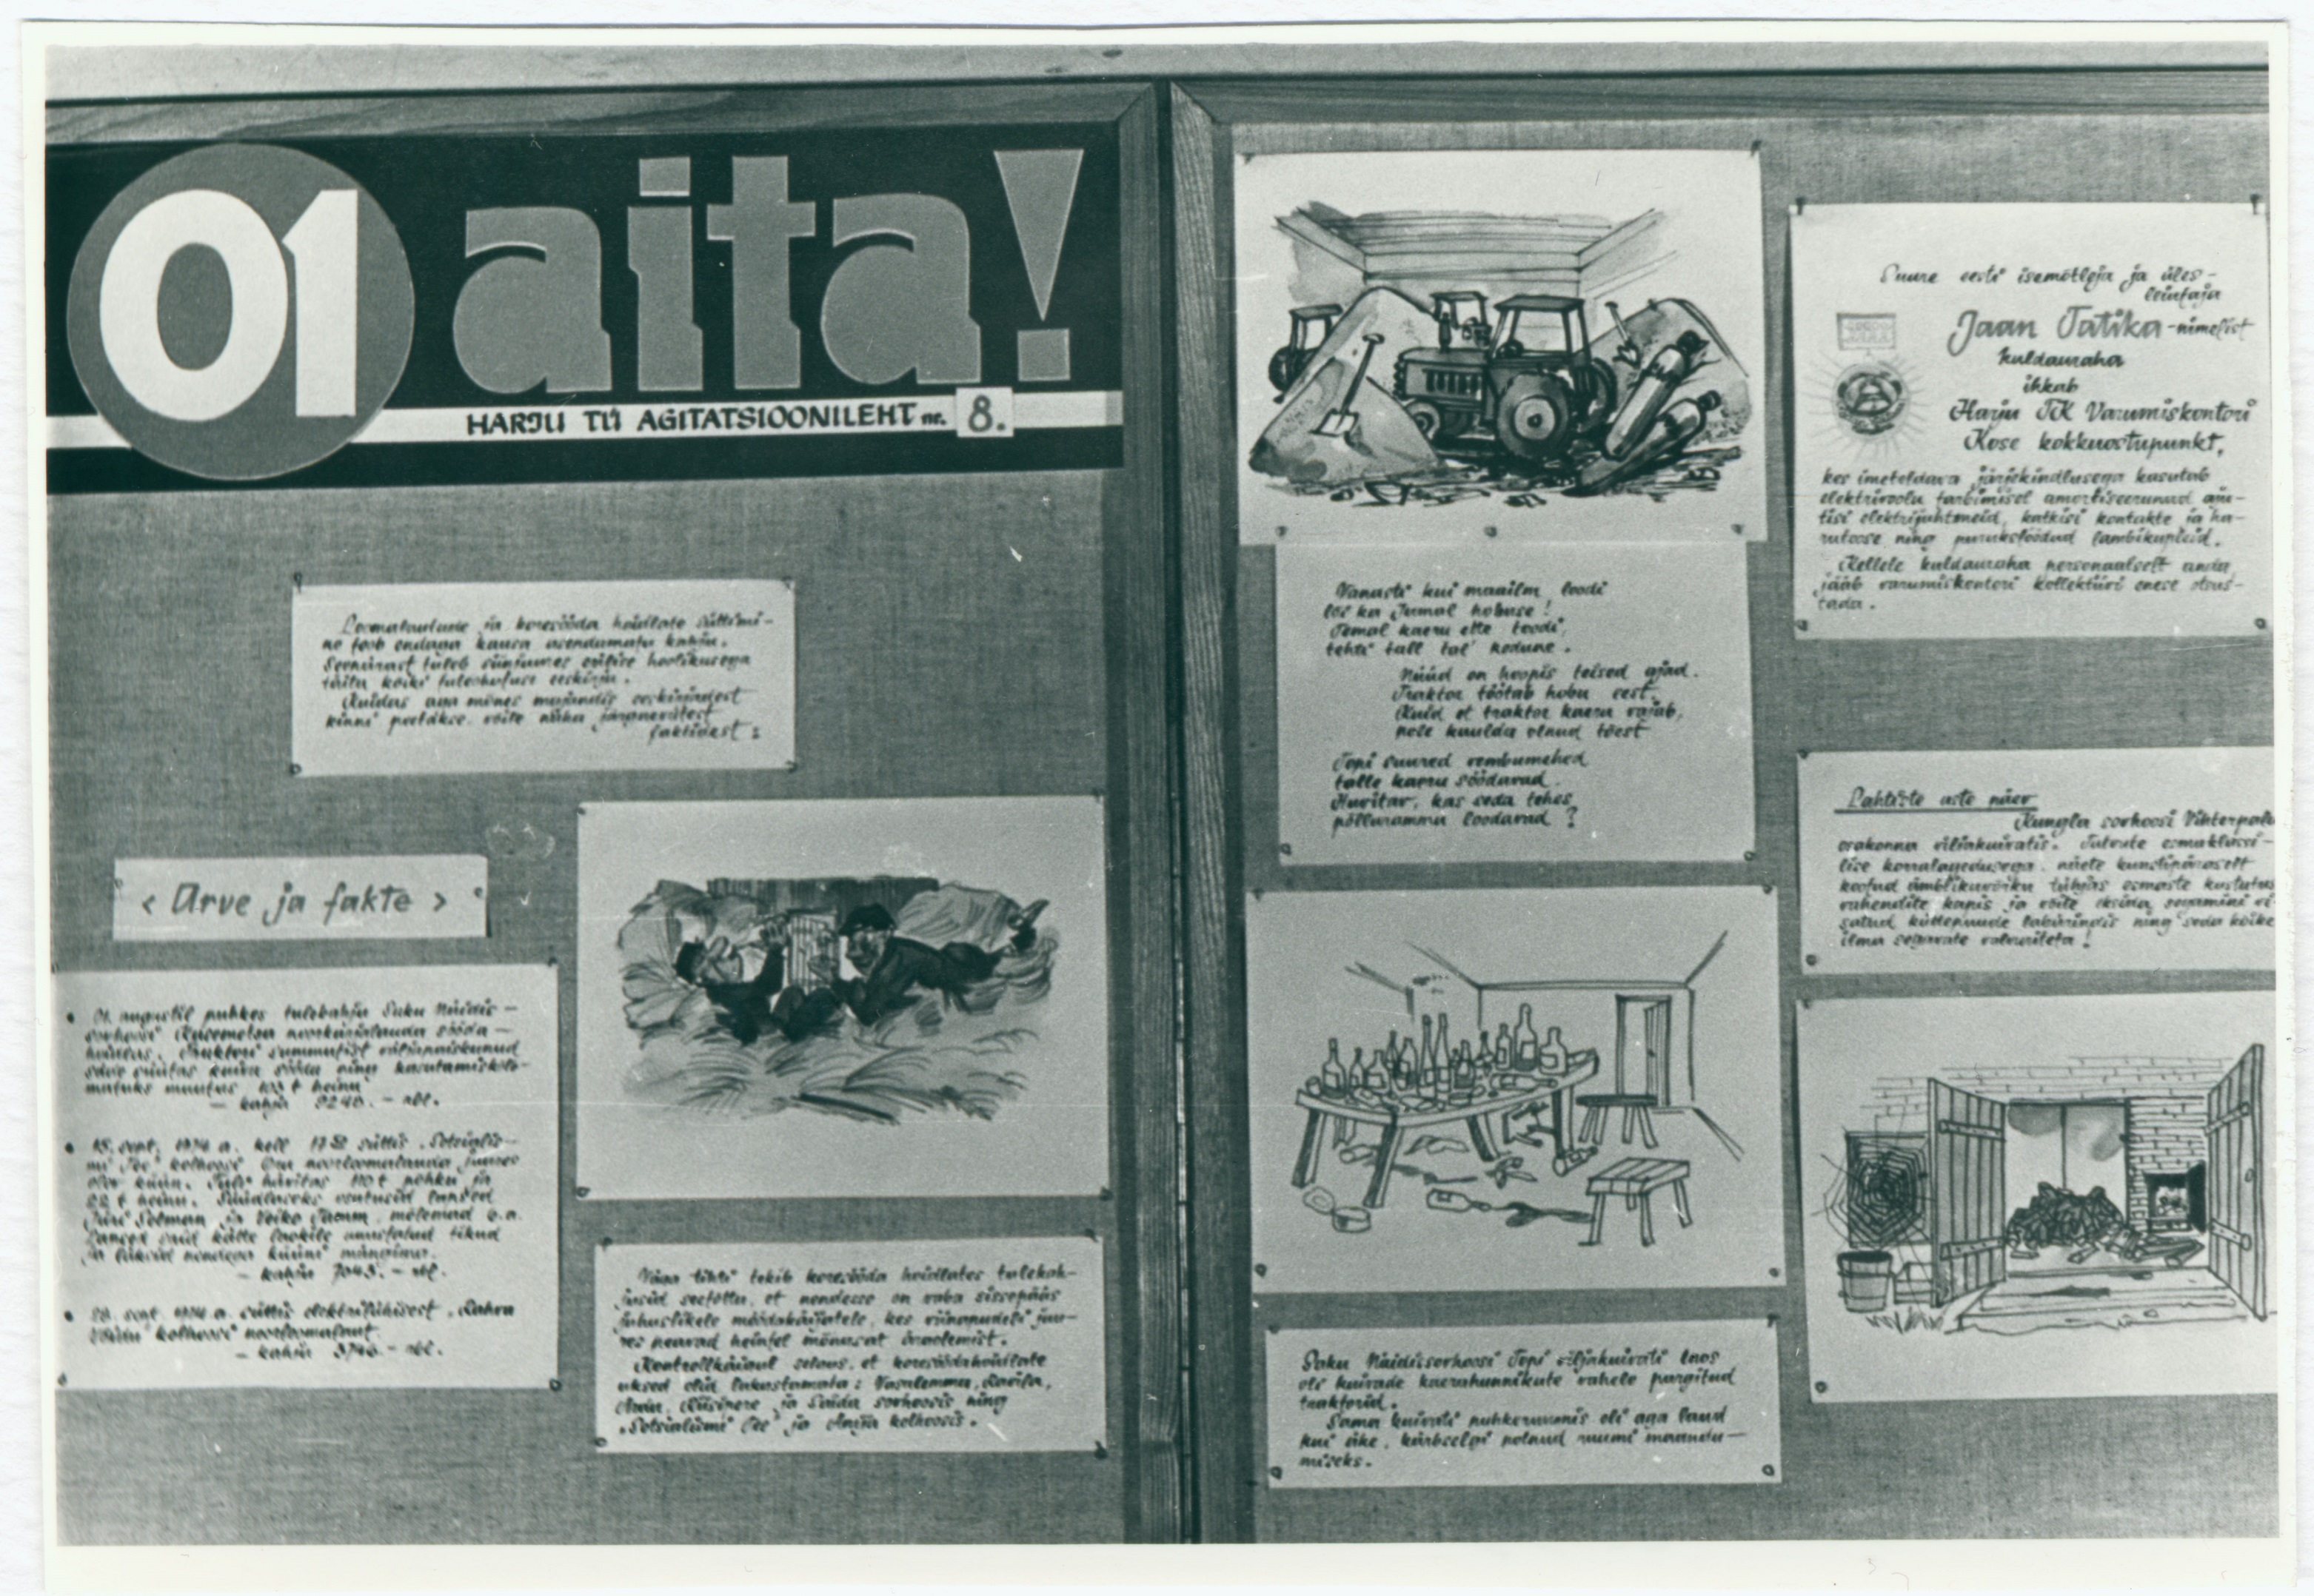 Harju TÜ agitatsioonileht - 01 Aita! 1974.a.